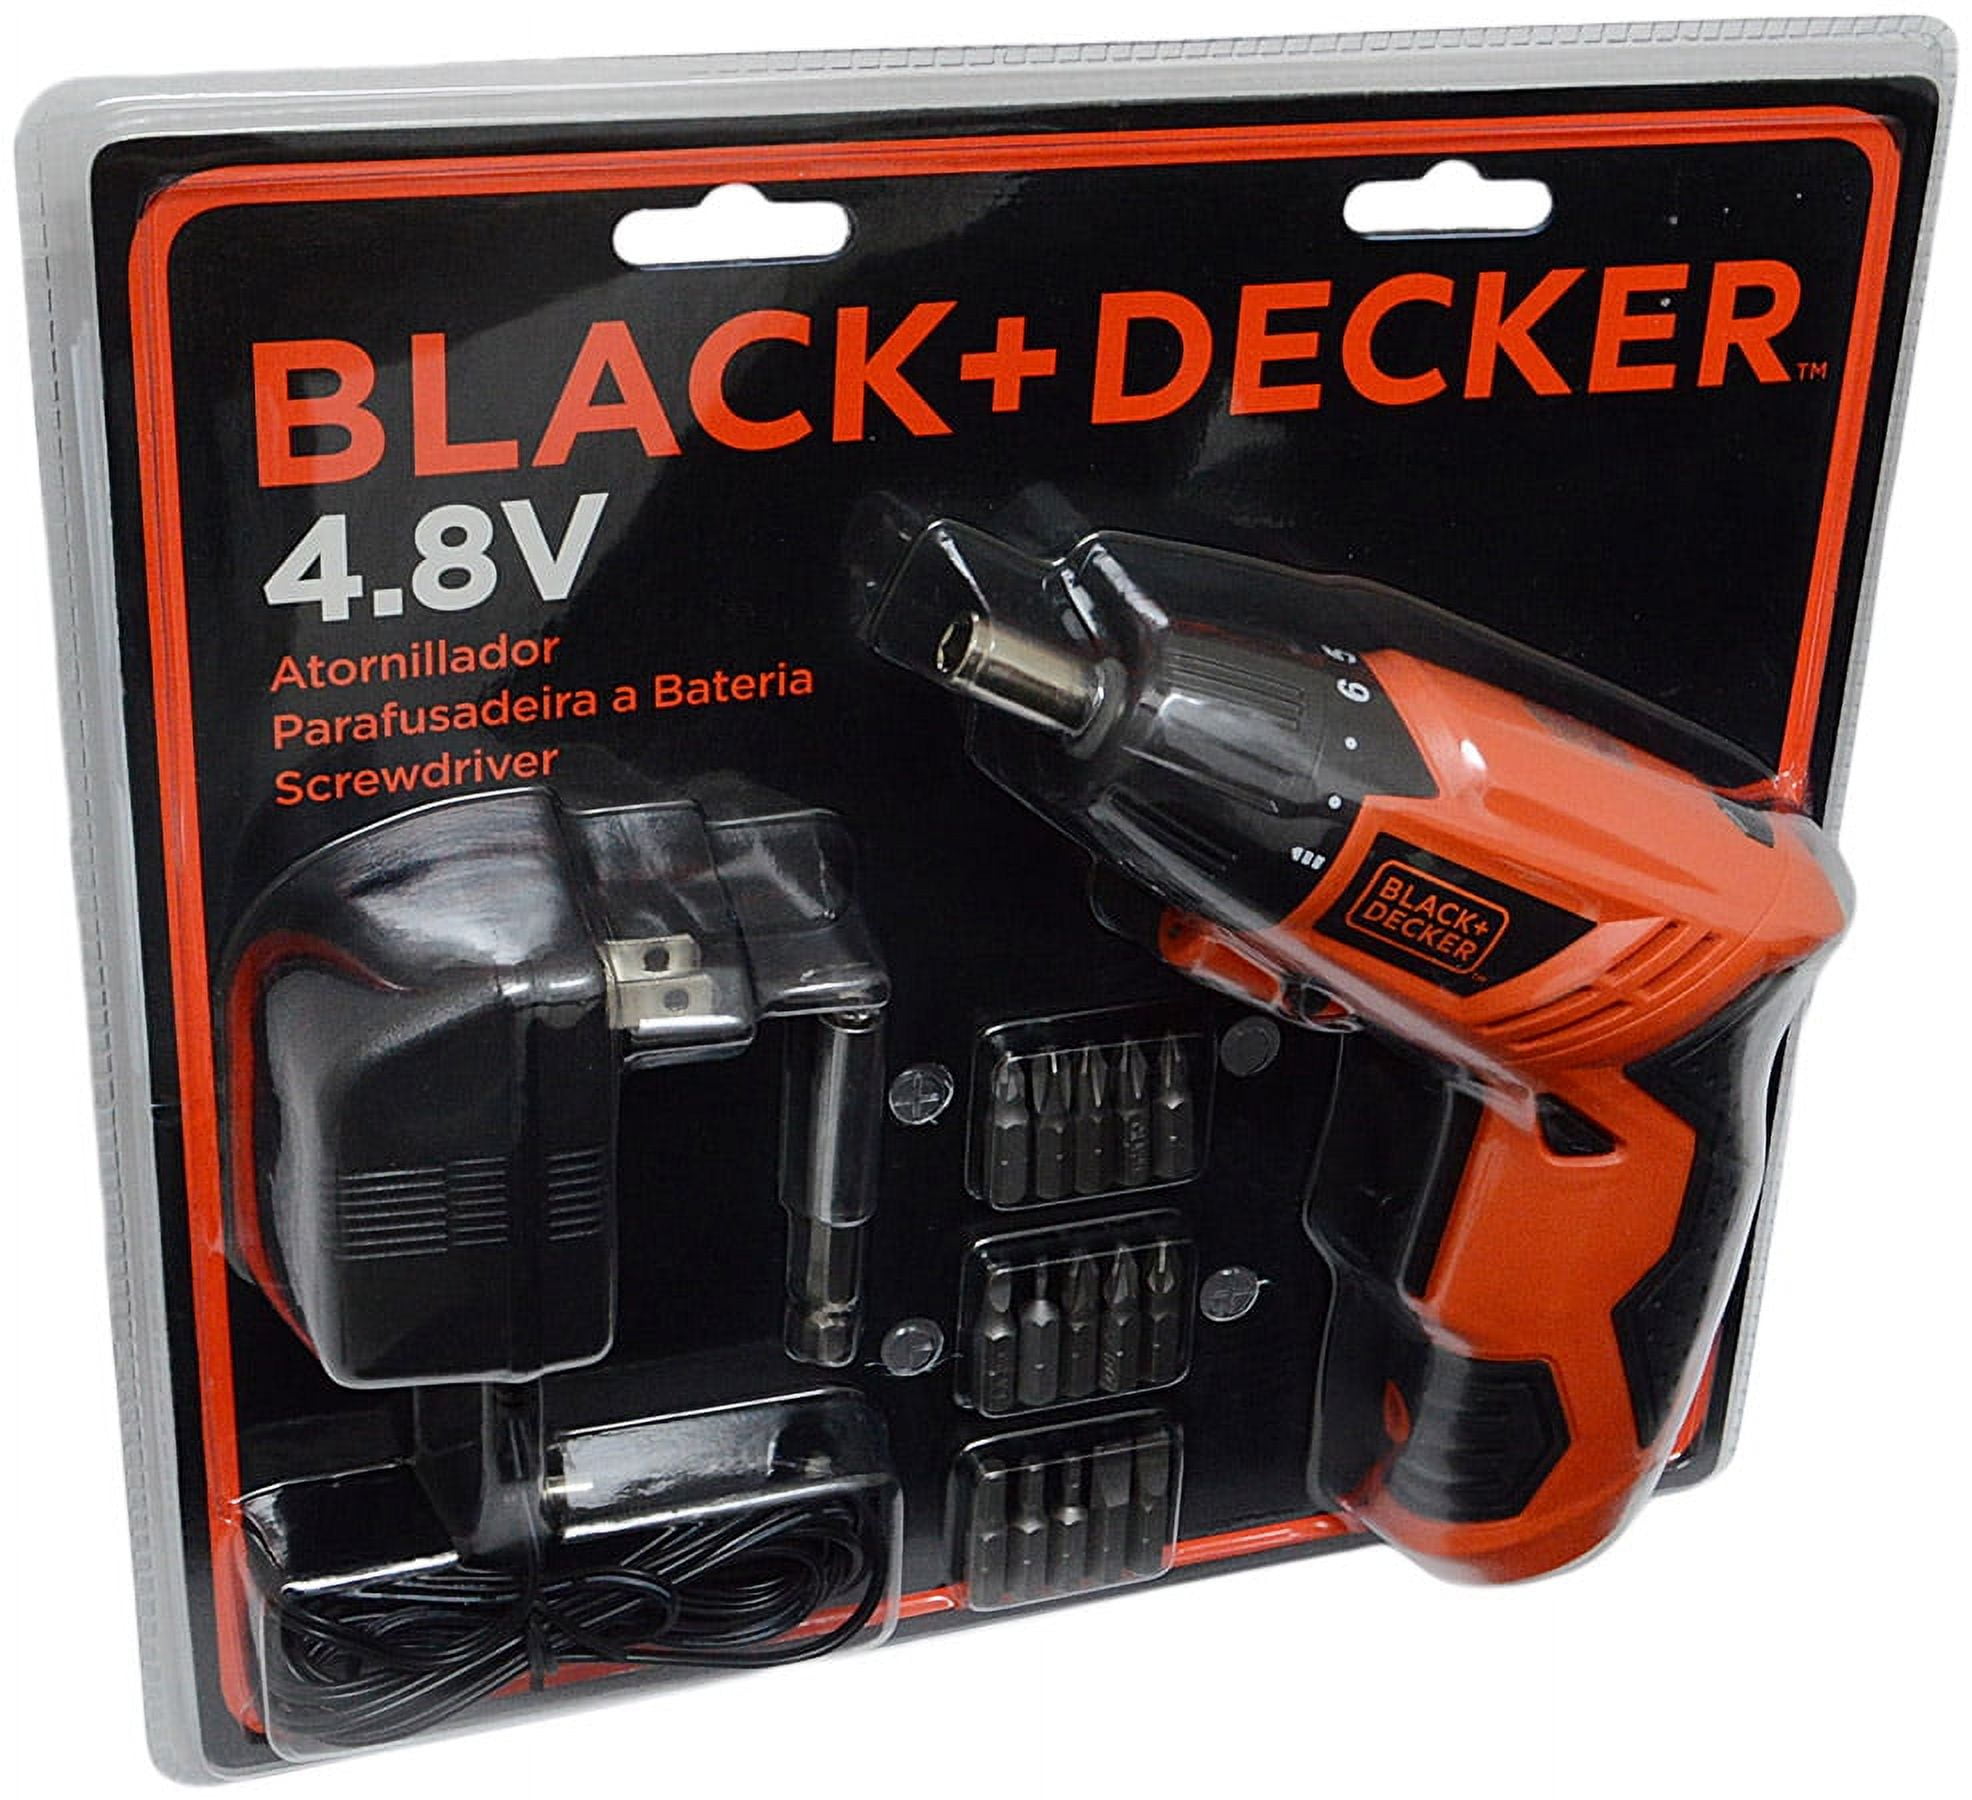 Black+Decker Cordless Screwdriver Set, KC4815 4.8V Battery Powered